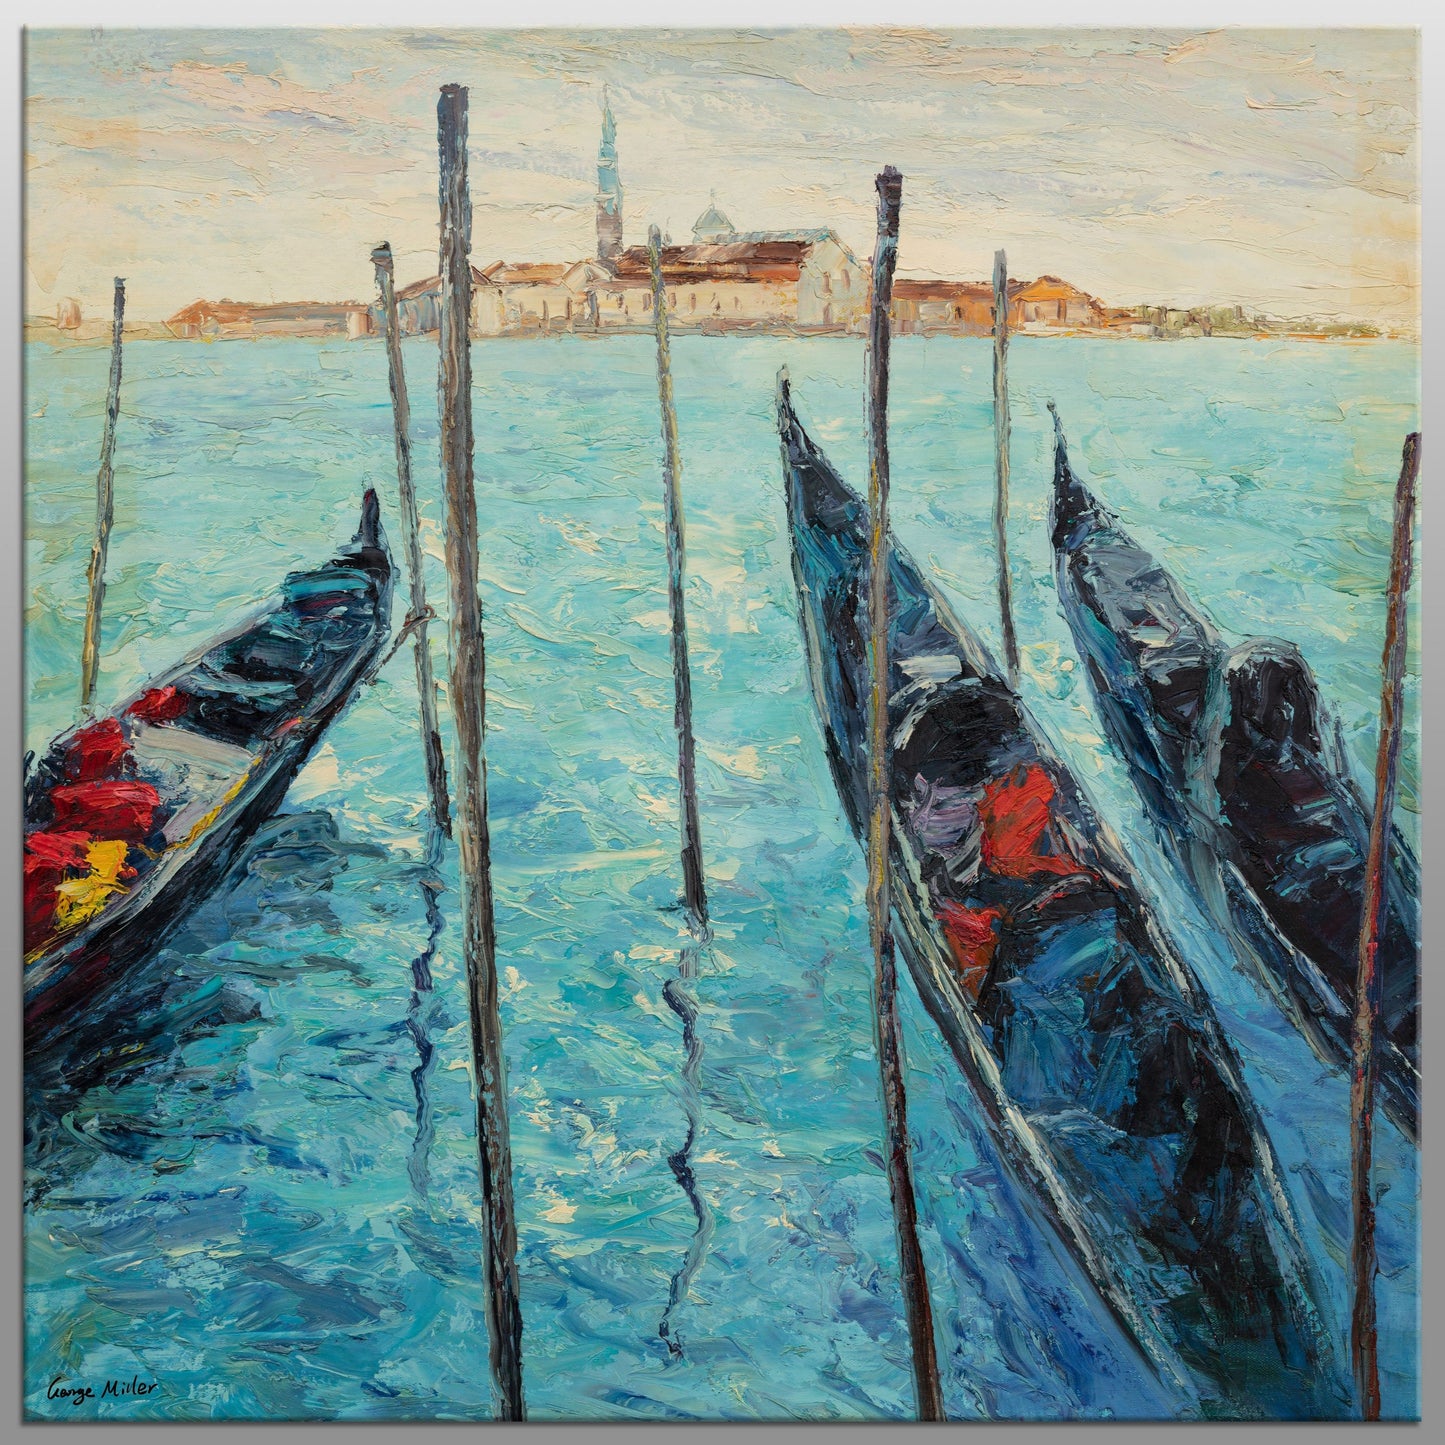 Italian Venice Oil Painting, Gondola, Palette Knife Painting, Original Painting, Landscape Painting, Large Art, Modern Art, Abstract Art